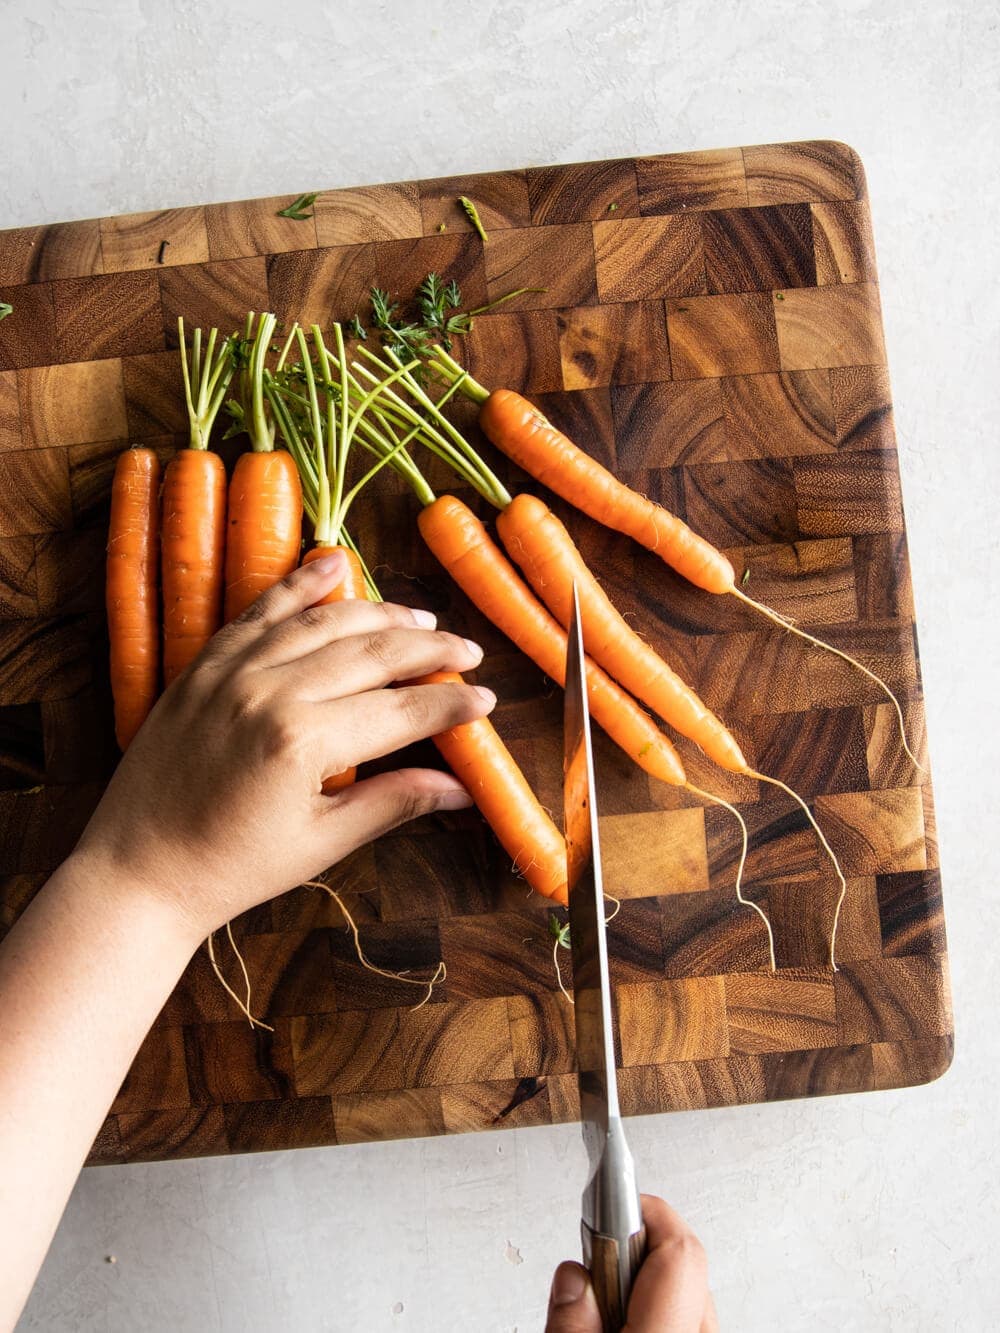 Hand cutting carrots on cutting board